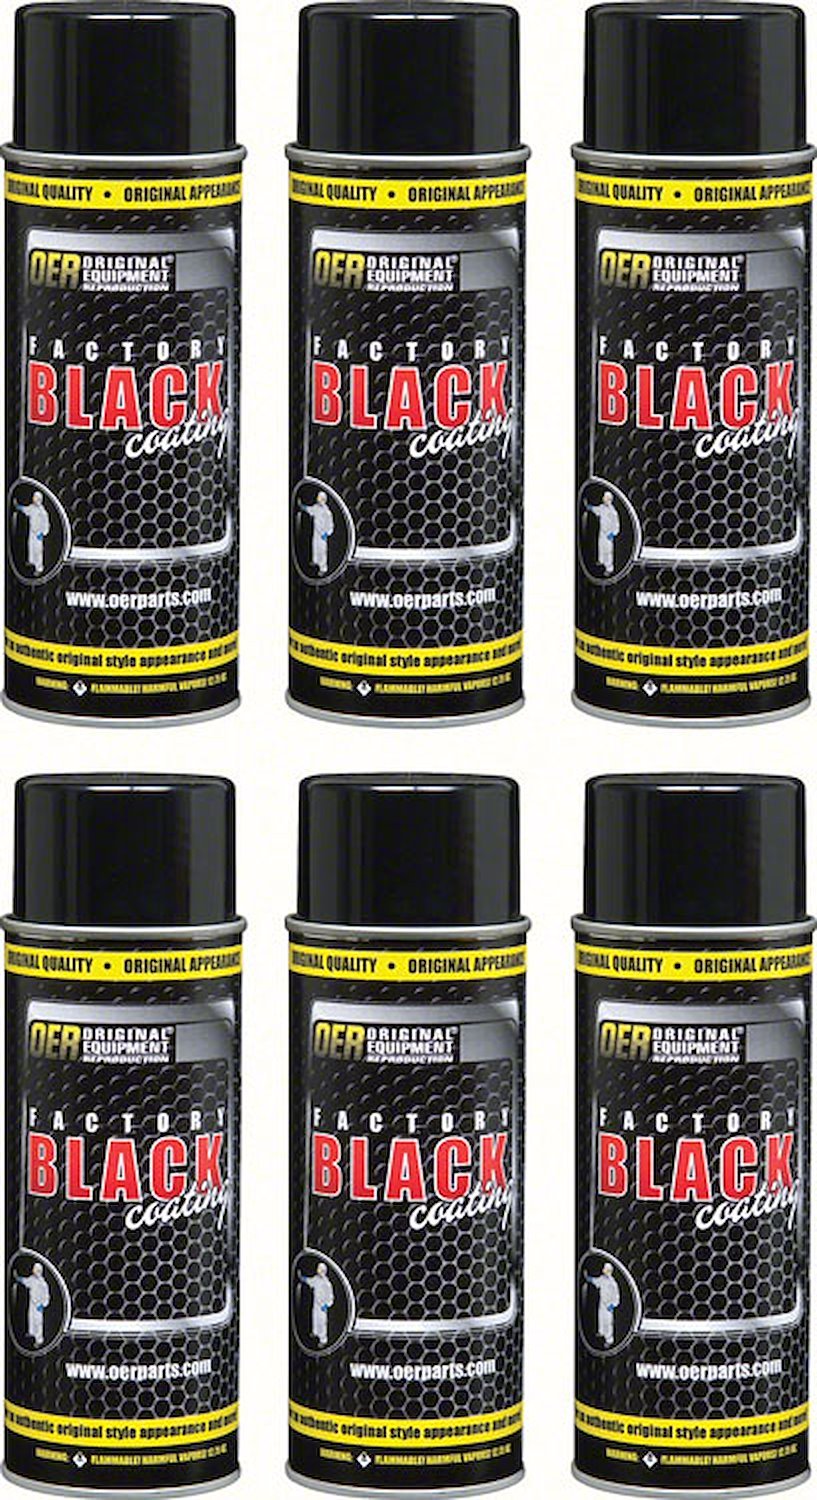 K89593 Semi Gloss Back Paint OER "Factory Black" Semi Gloss Black Paint Case of 6; 16 Oz Aerosol Cans